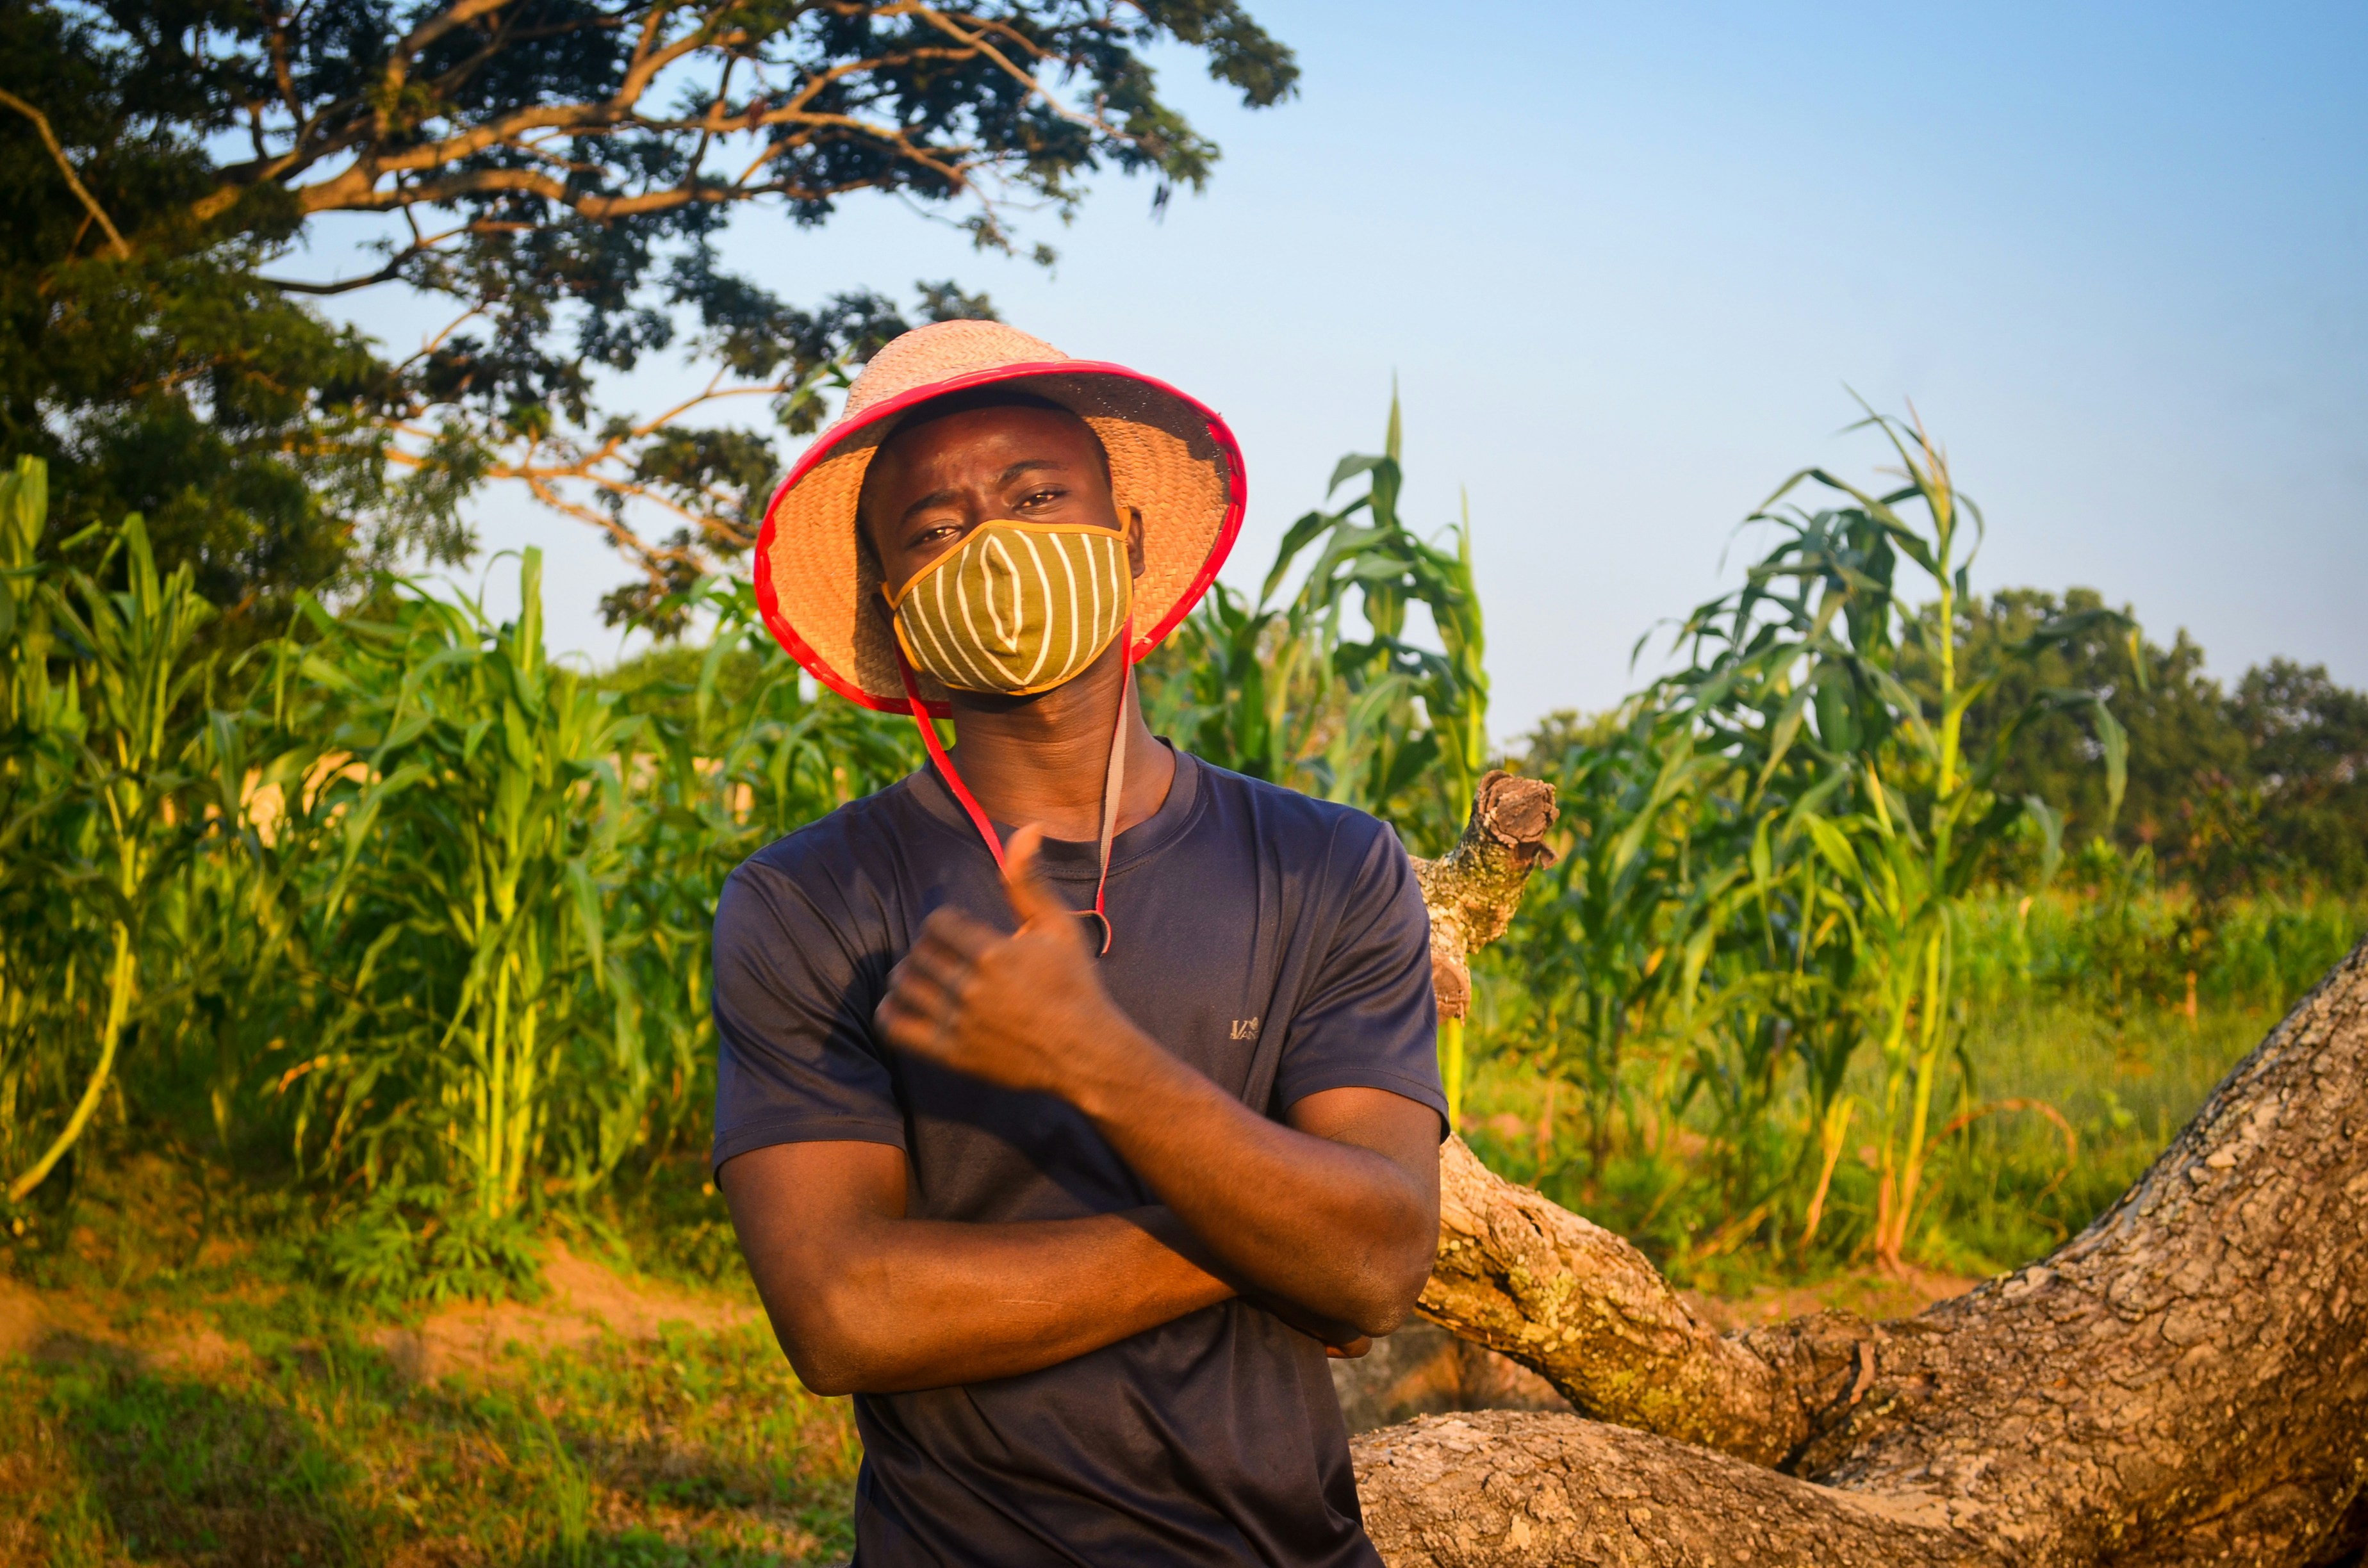 Black farmer; image by Abubakar Oalogun, via Unsplash.com.